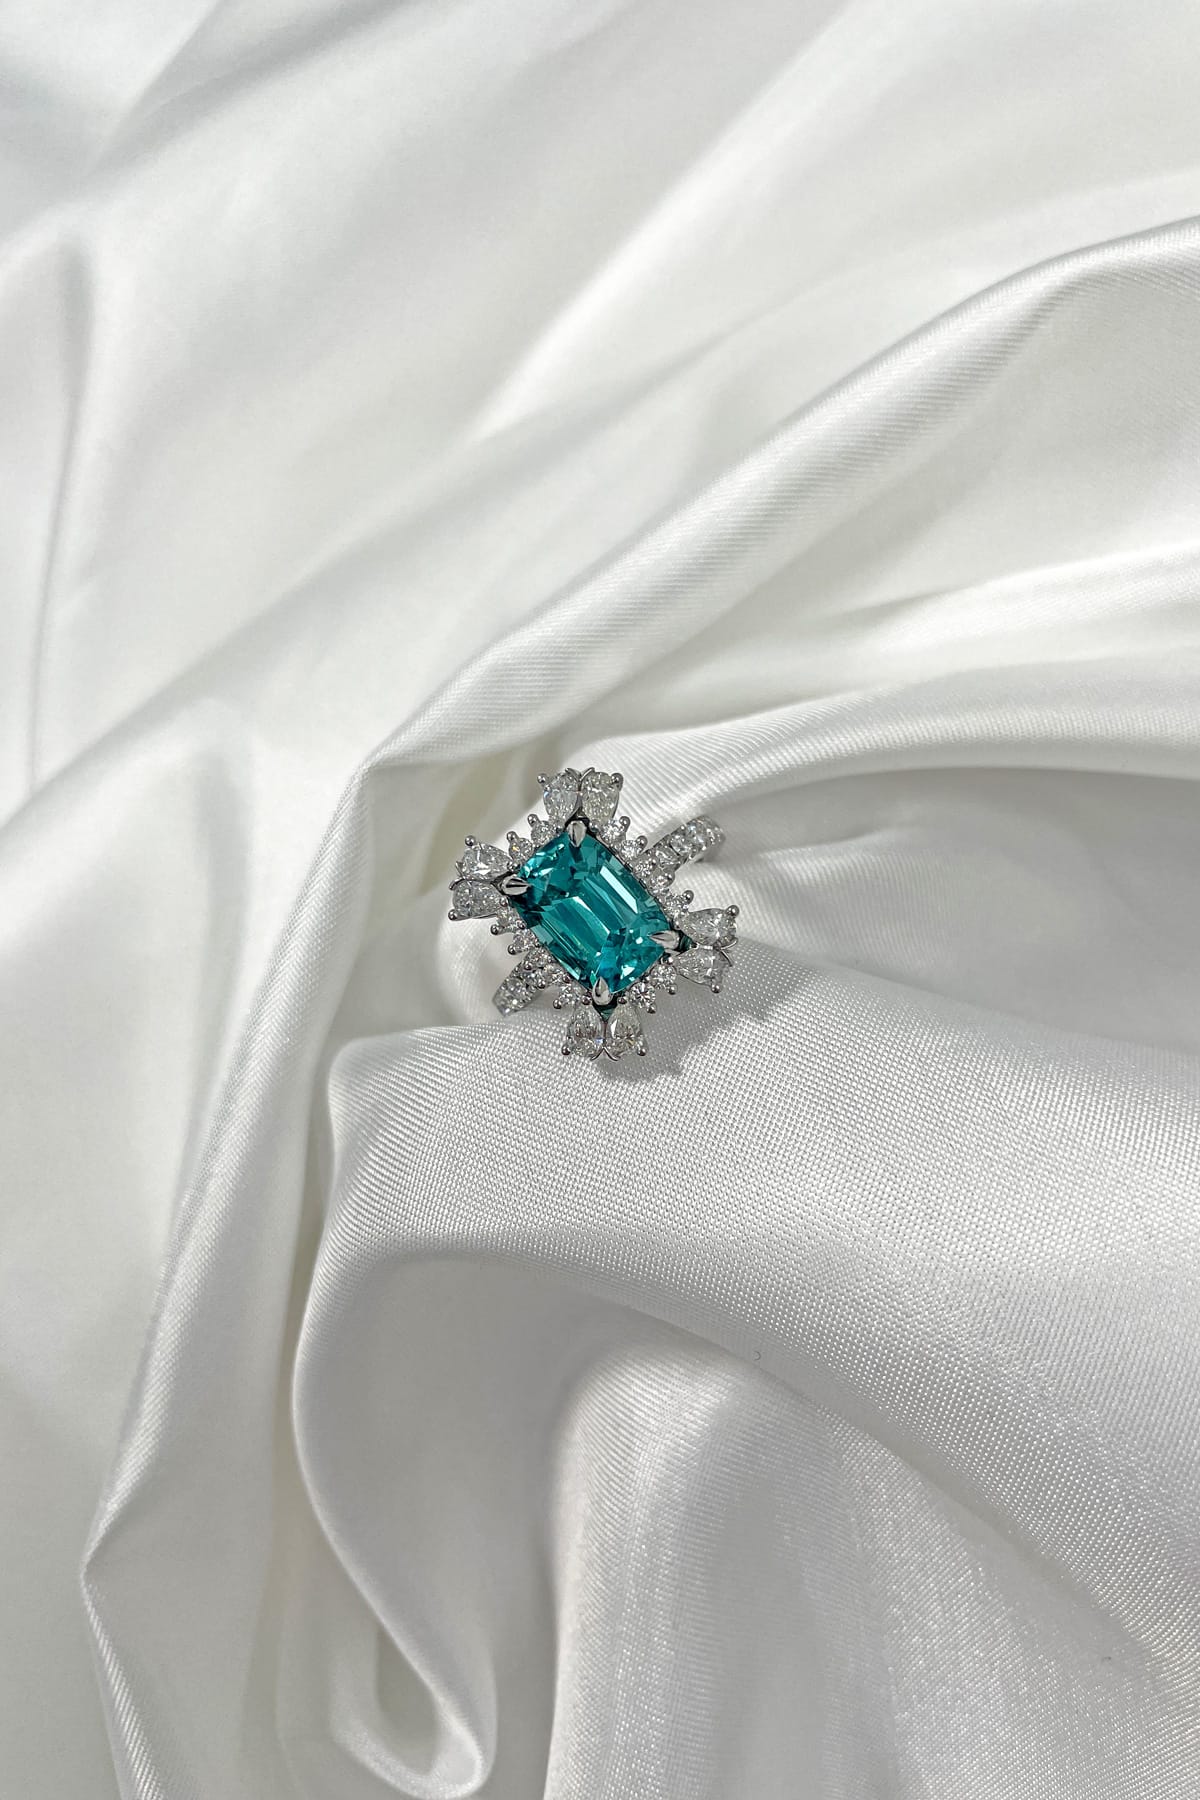 Coloured gemstone and diamond ring from LeGassick Diamonds and Jewellery Gold Coast, Australia